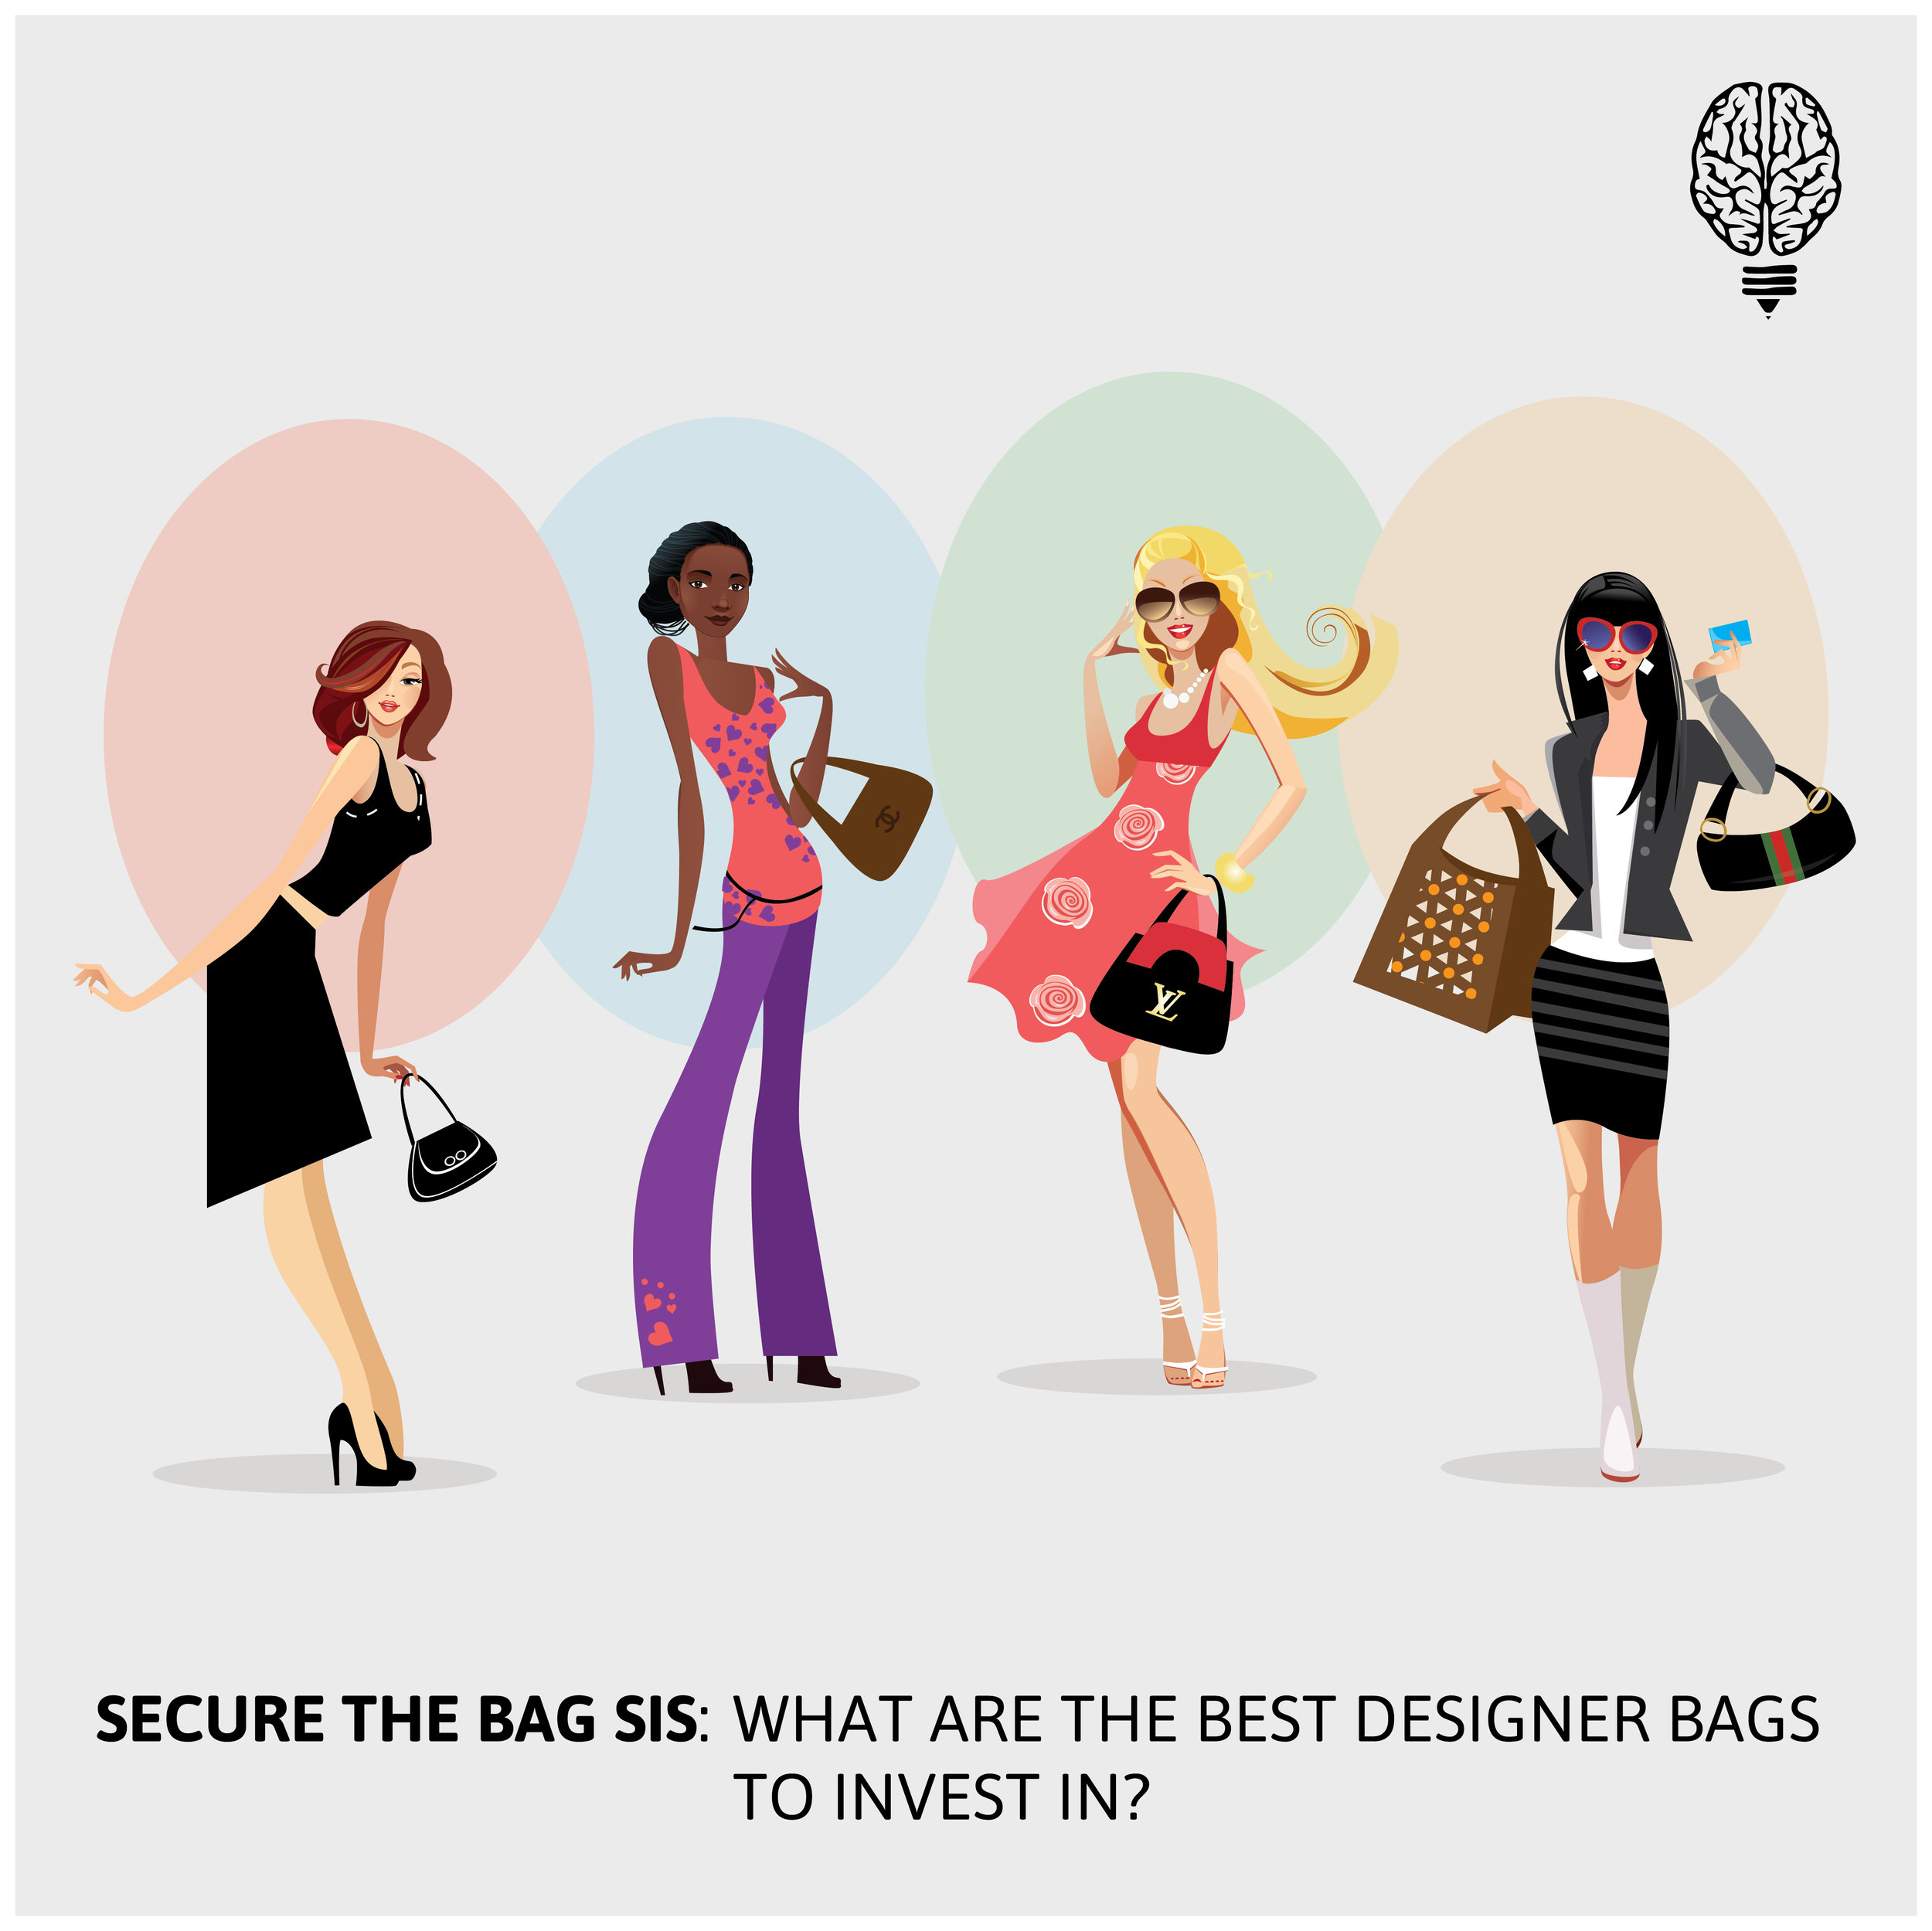 The Best Luxury Handbags to Invest In (2019 Update)